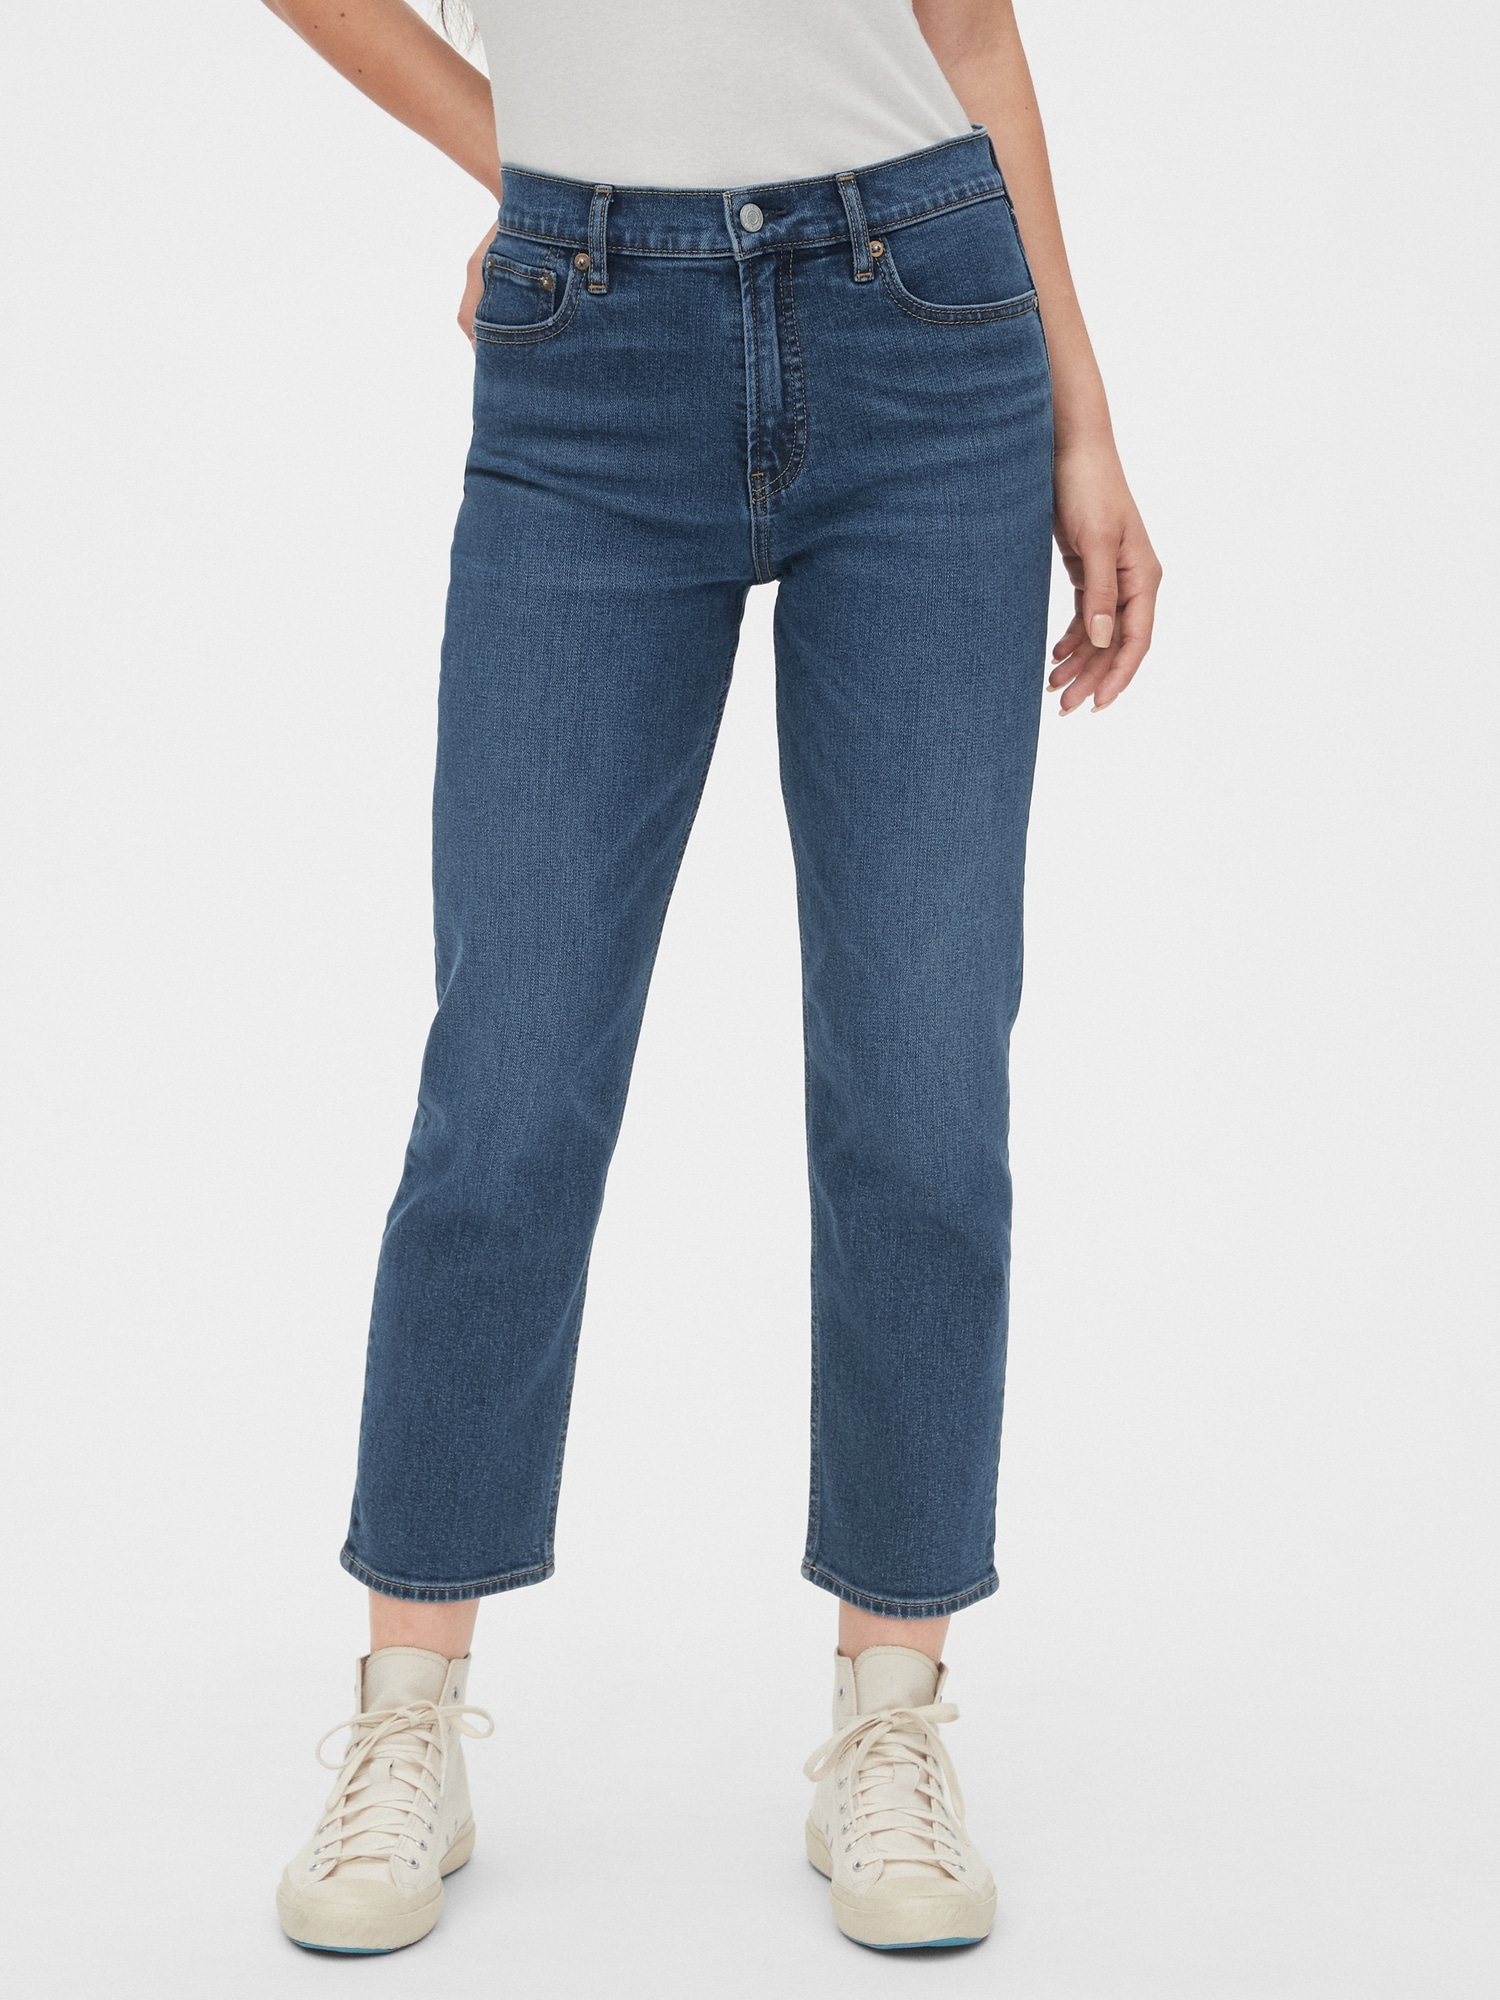 gap 1969 white jeans